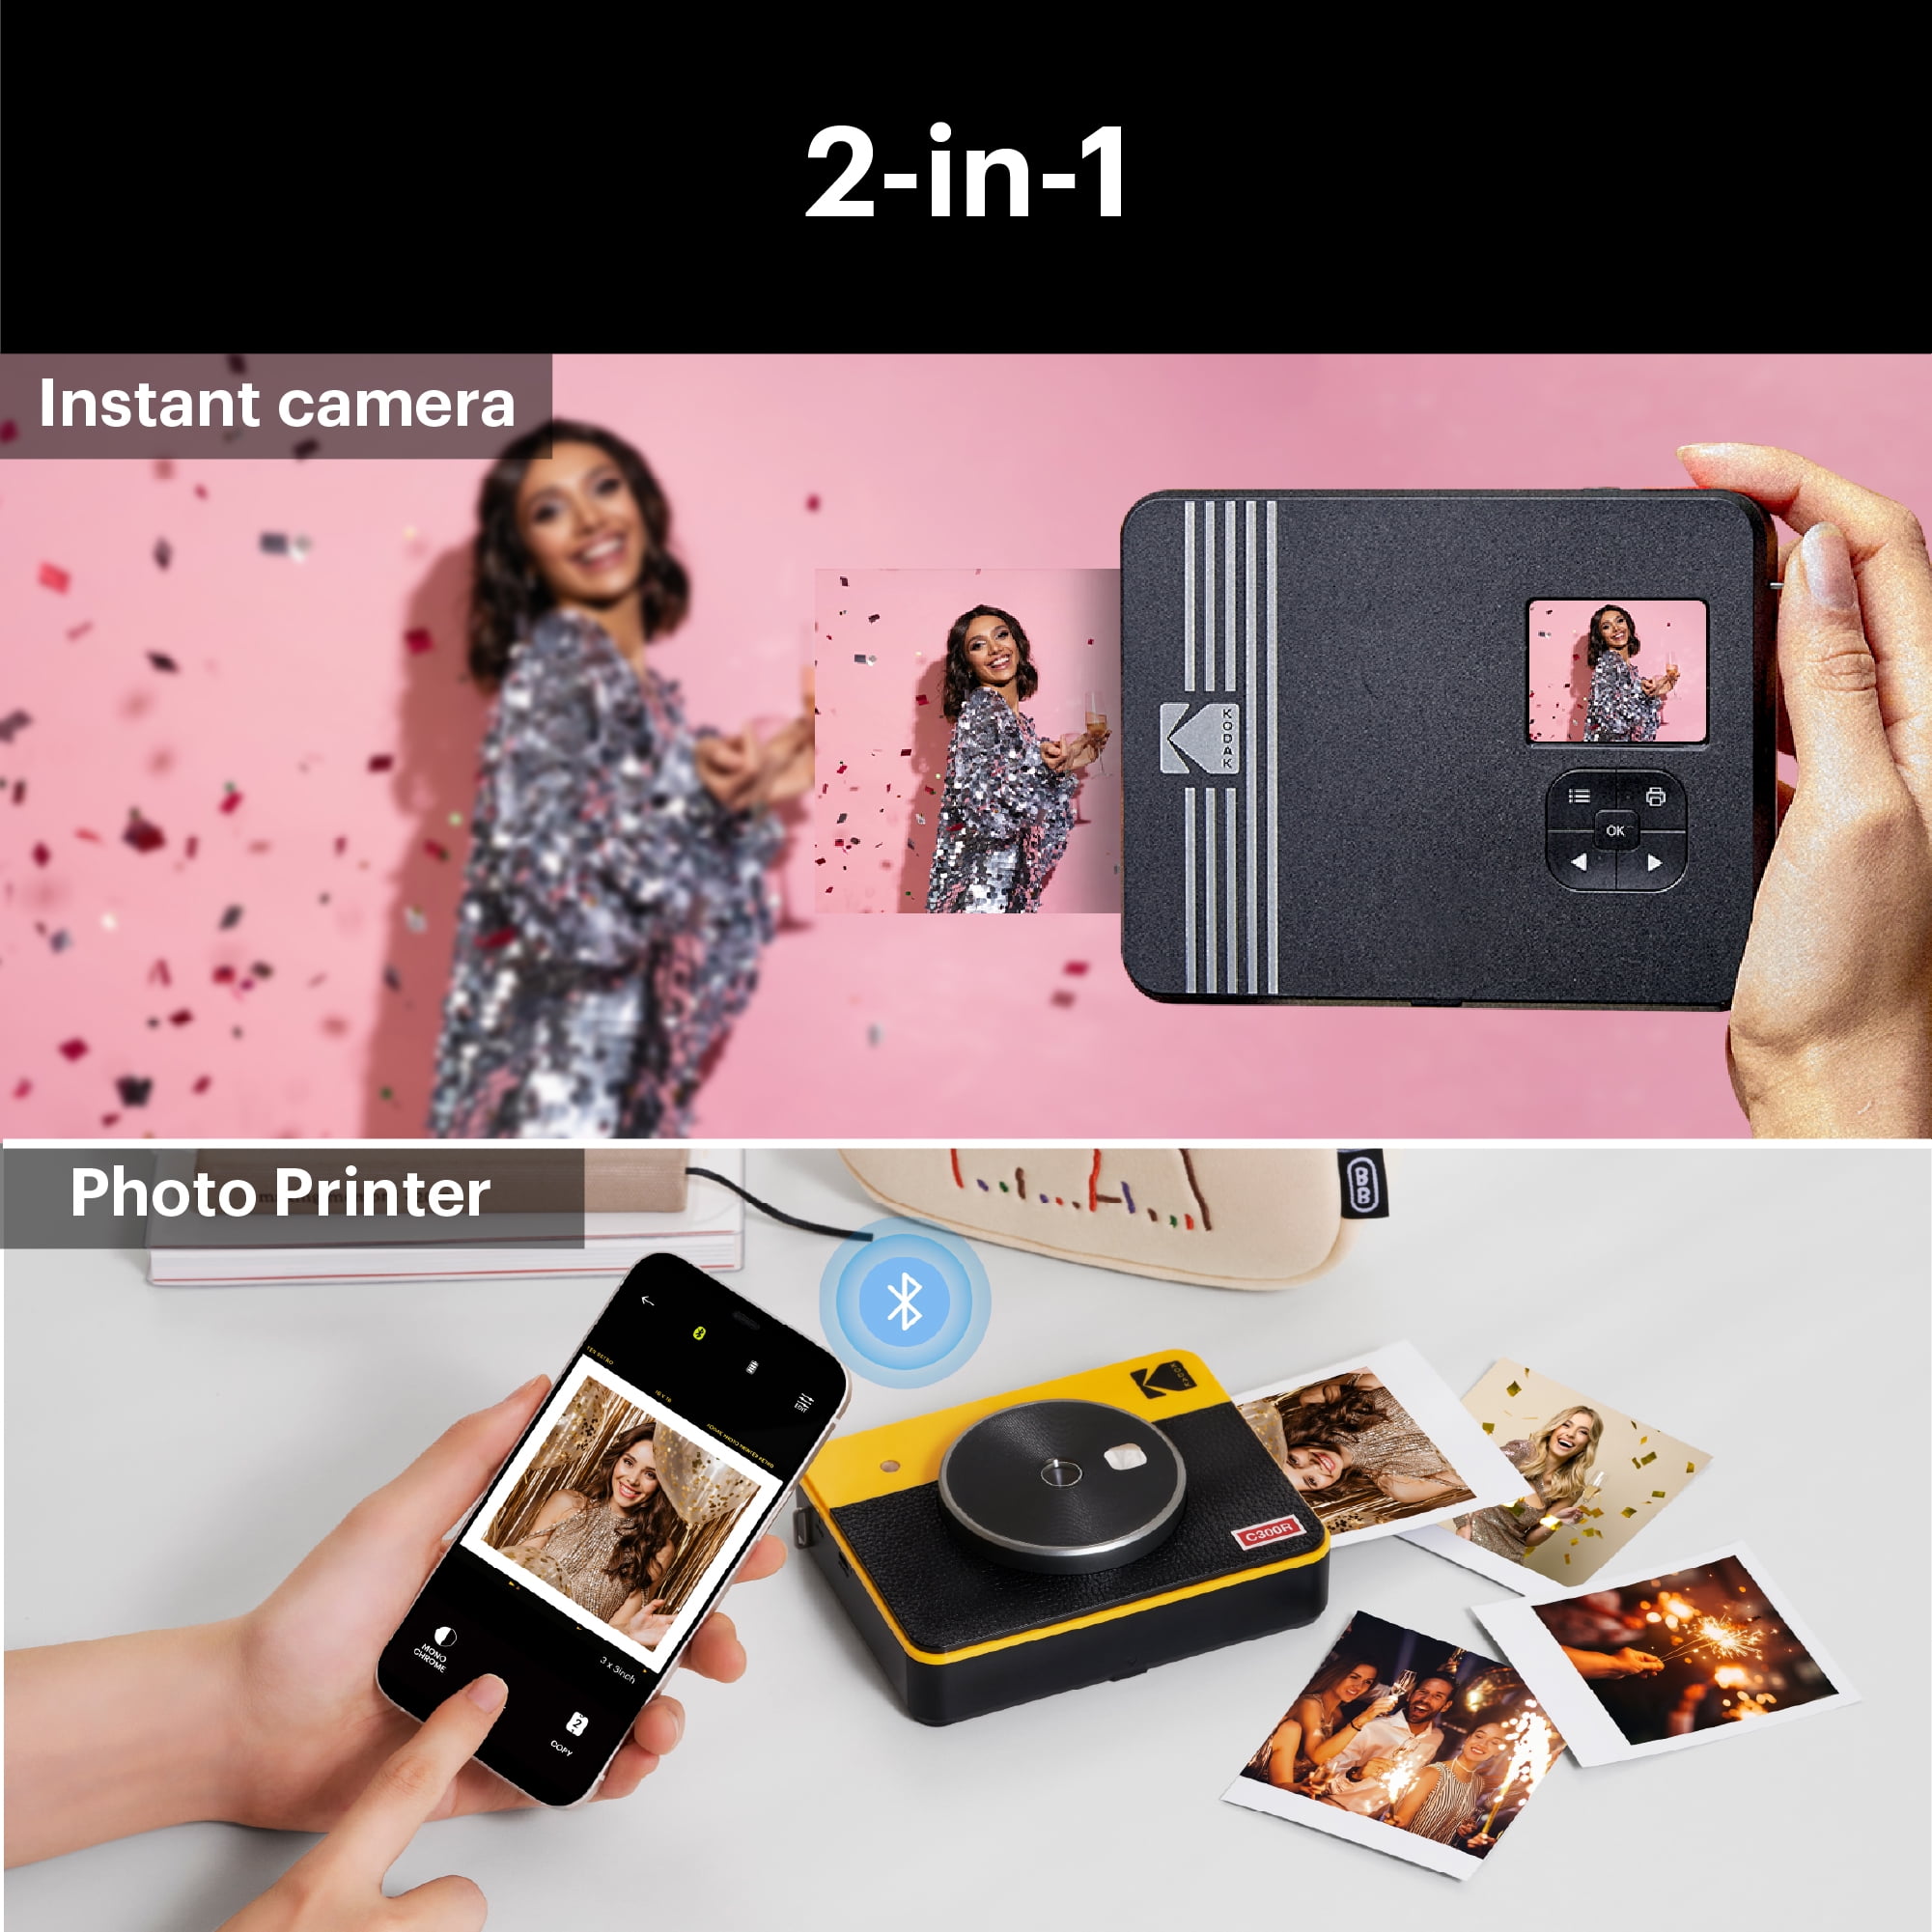 KODAK Mini Shot 3 Retro 4PASS 2-in-1 Instant Digital Camera and Photo  Printer (3x3 inches) + 60 Sheets Cartridge Bundle, White